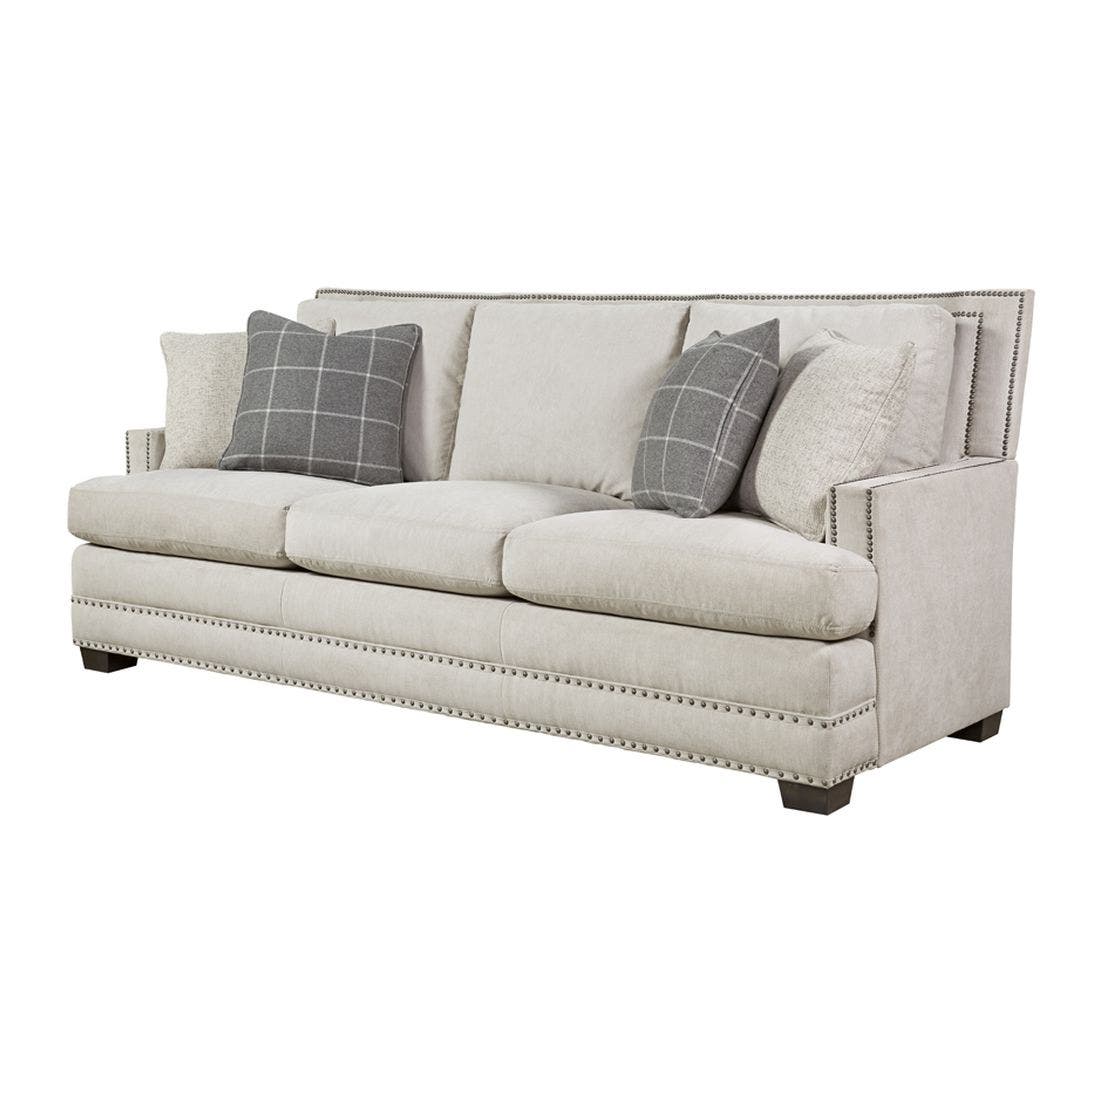 19134597-772501-617-furniture-sofa-recliner-sofas-01